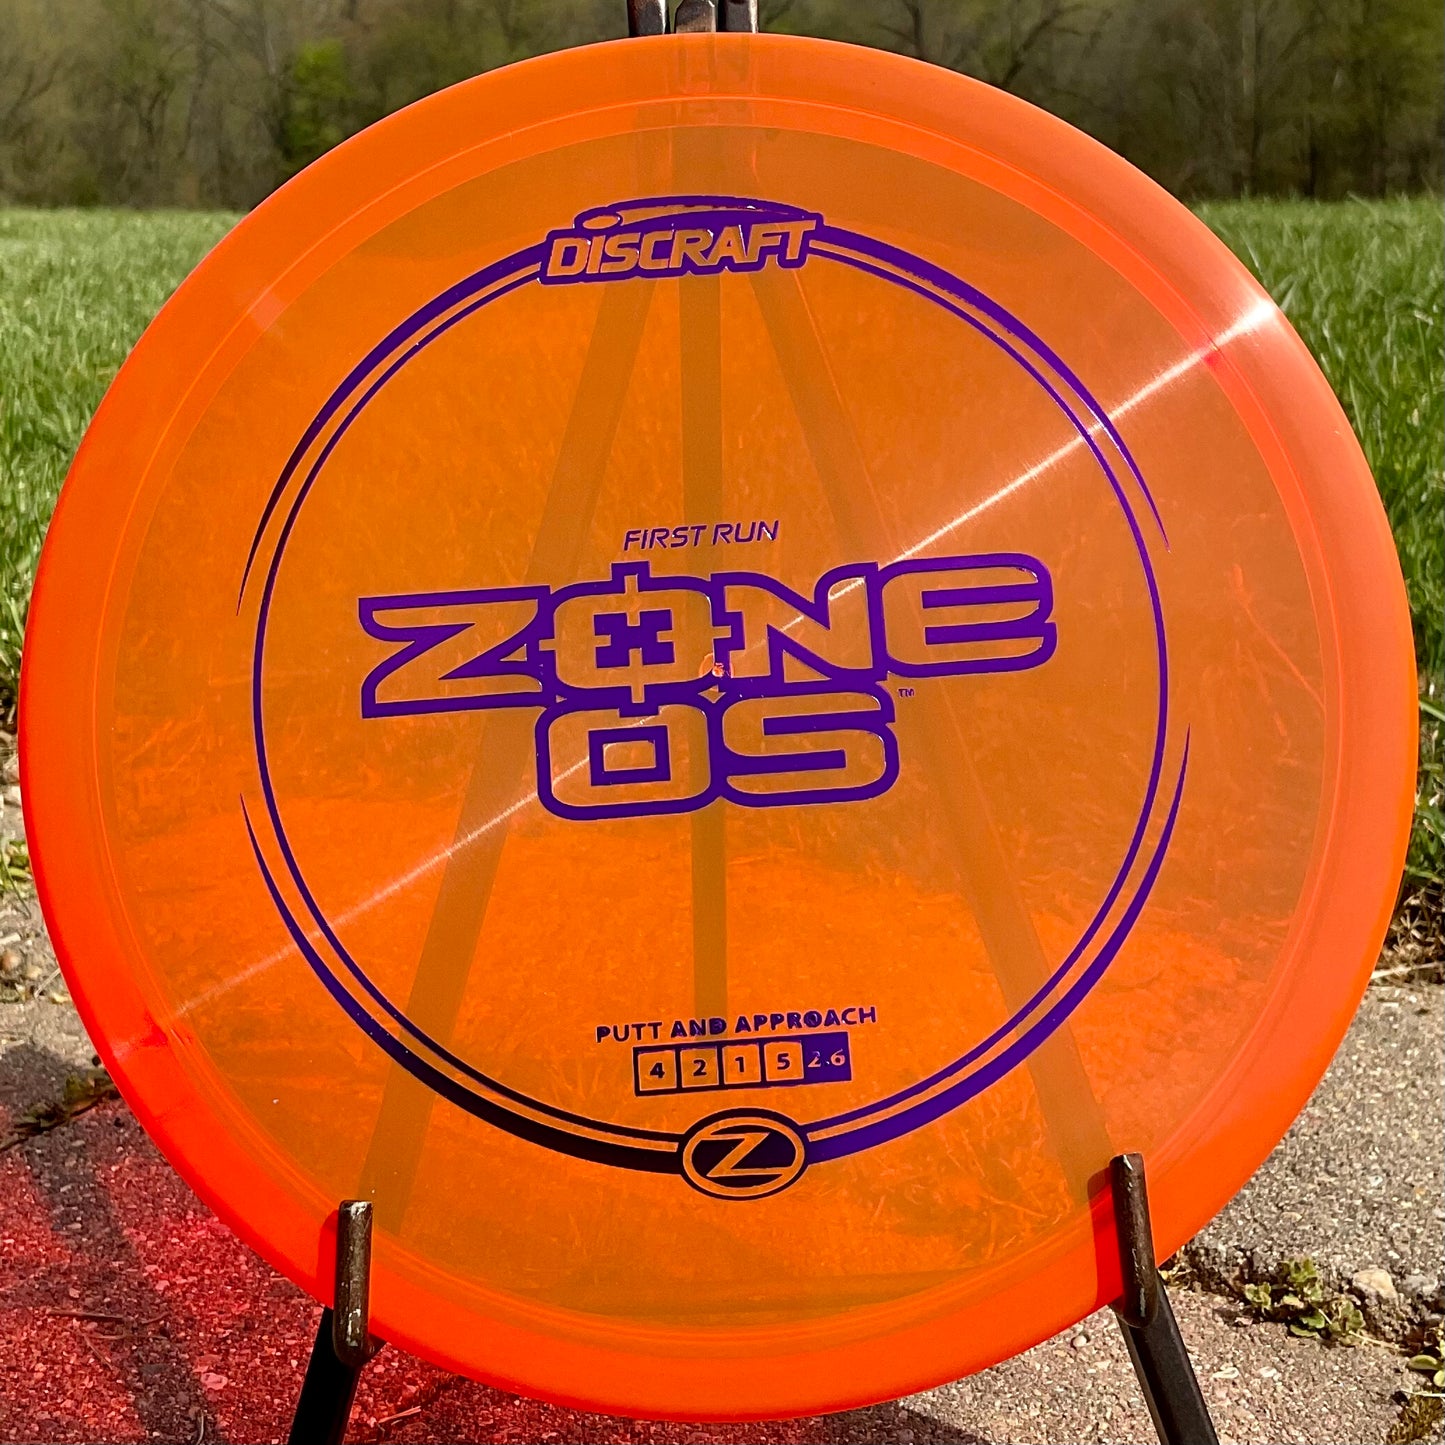 Discraft First Run Z Line Zone OS